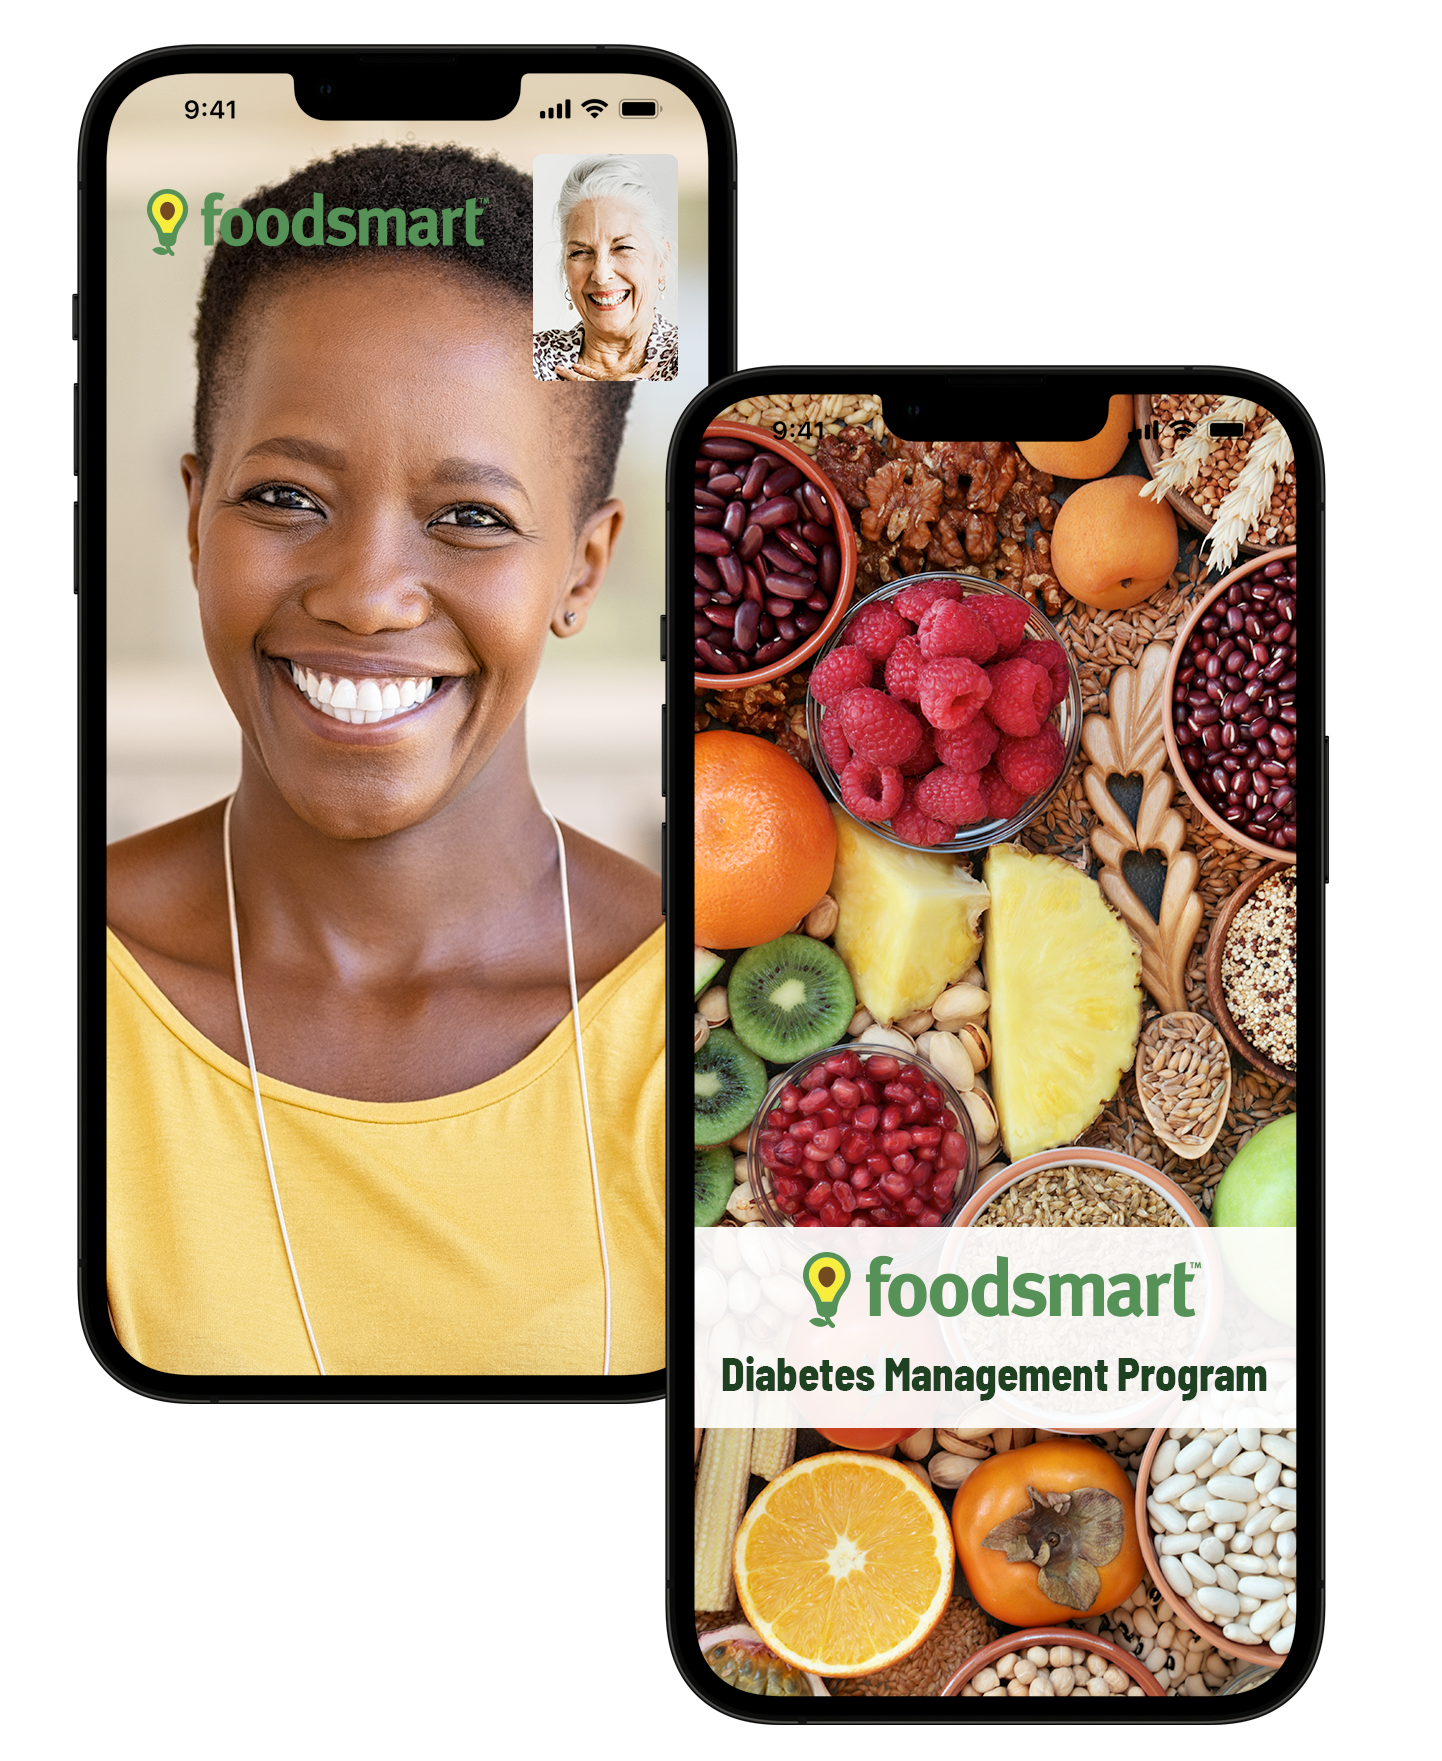 Images of the Foodsmart Mobile App showing the Diabetes Management Program